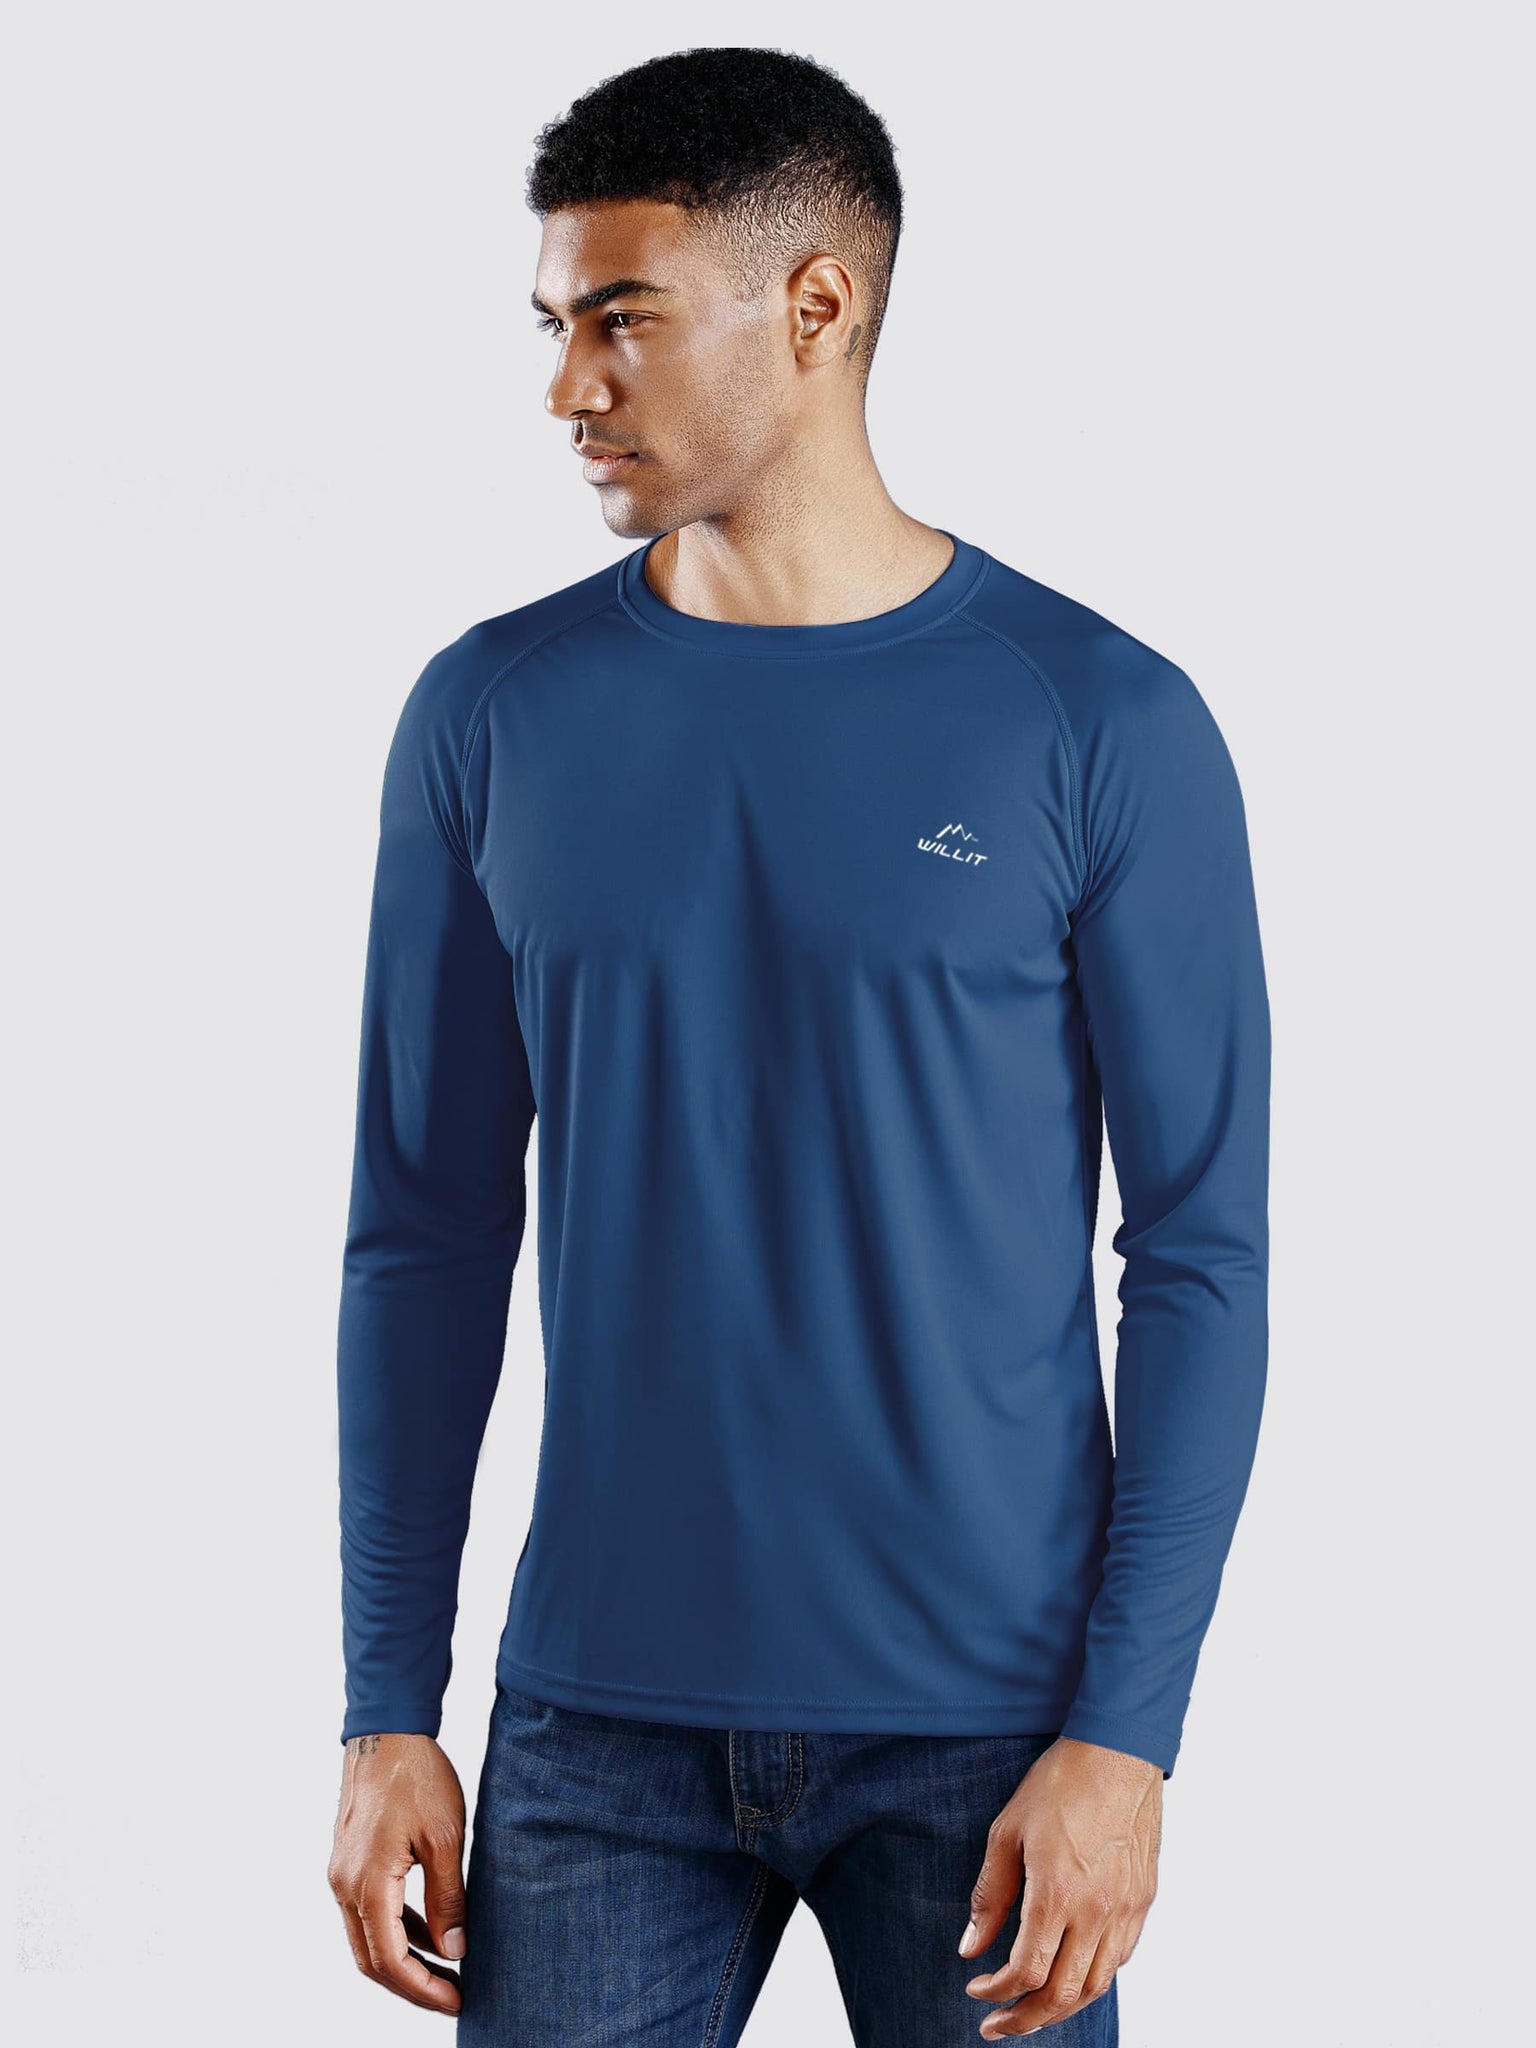 Willit Men's Sun Protection Long Sleeve Shirts_Ocean Blue_model3